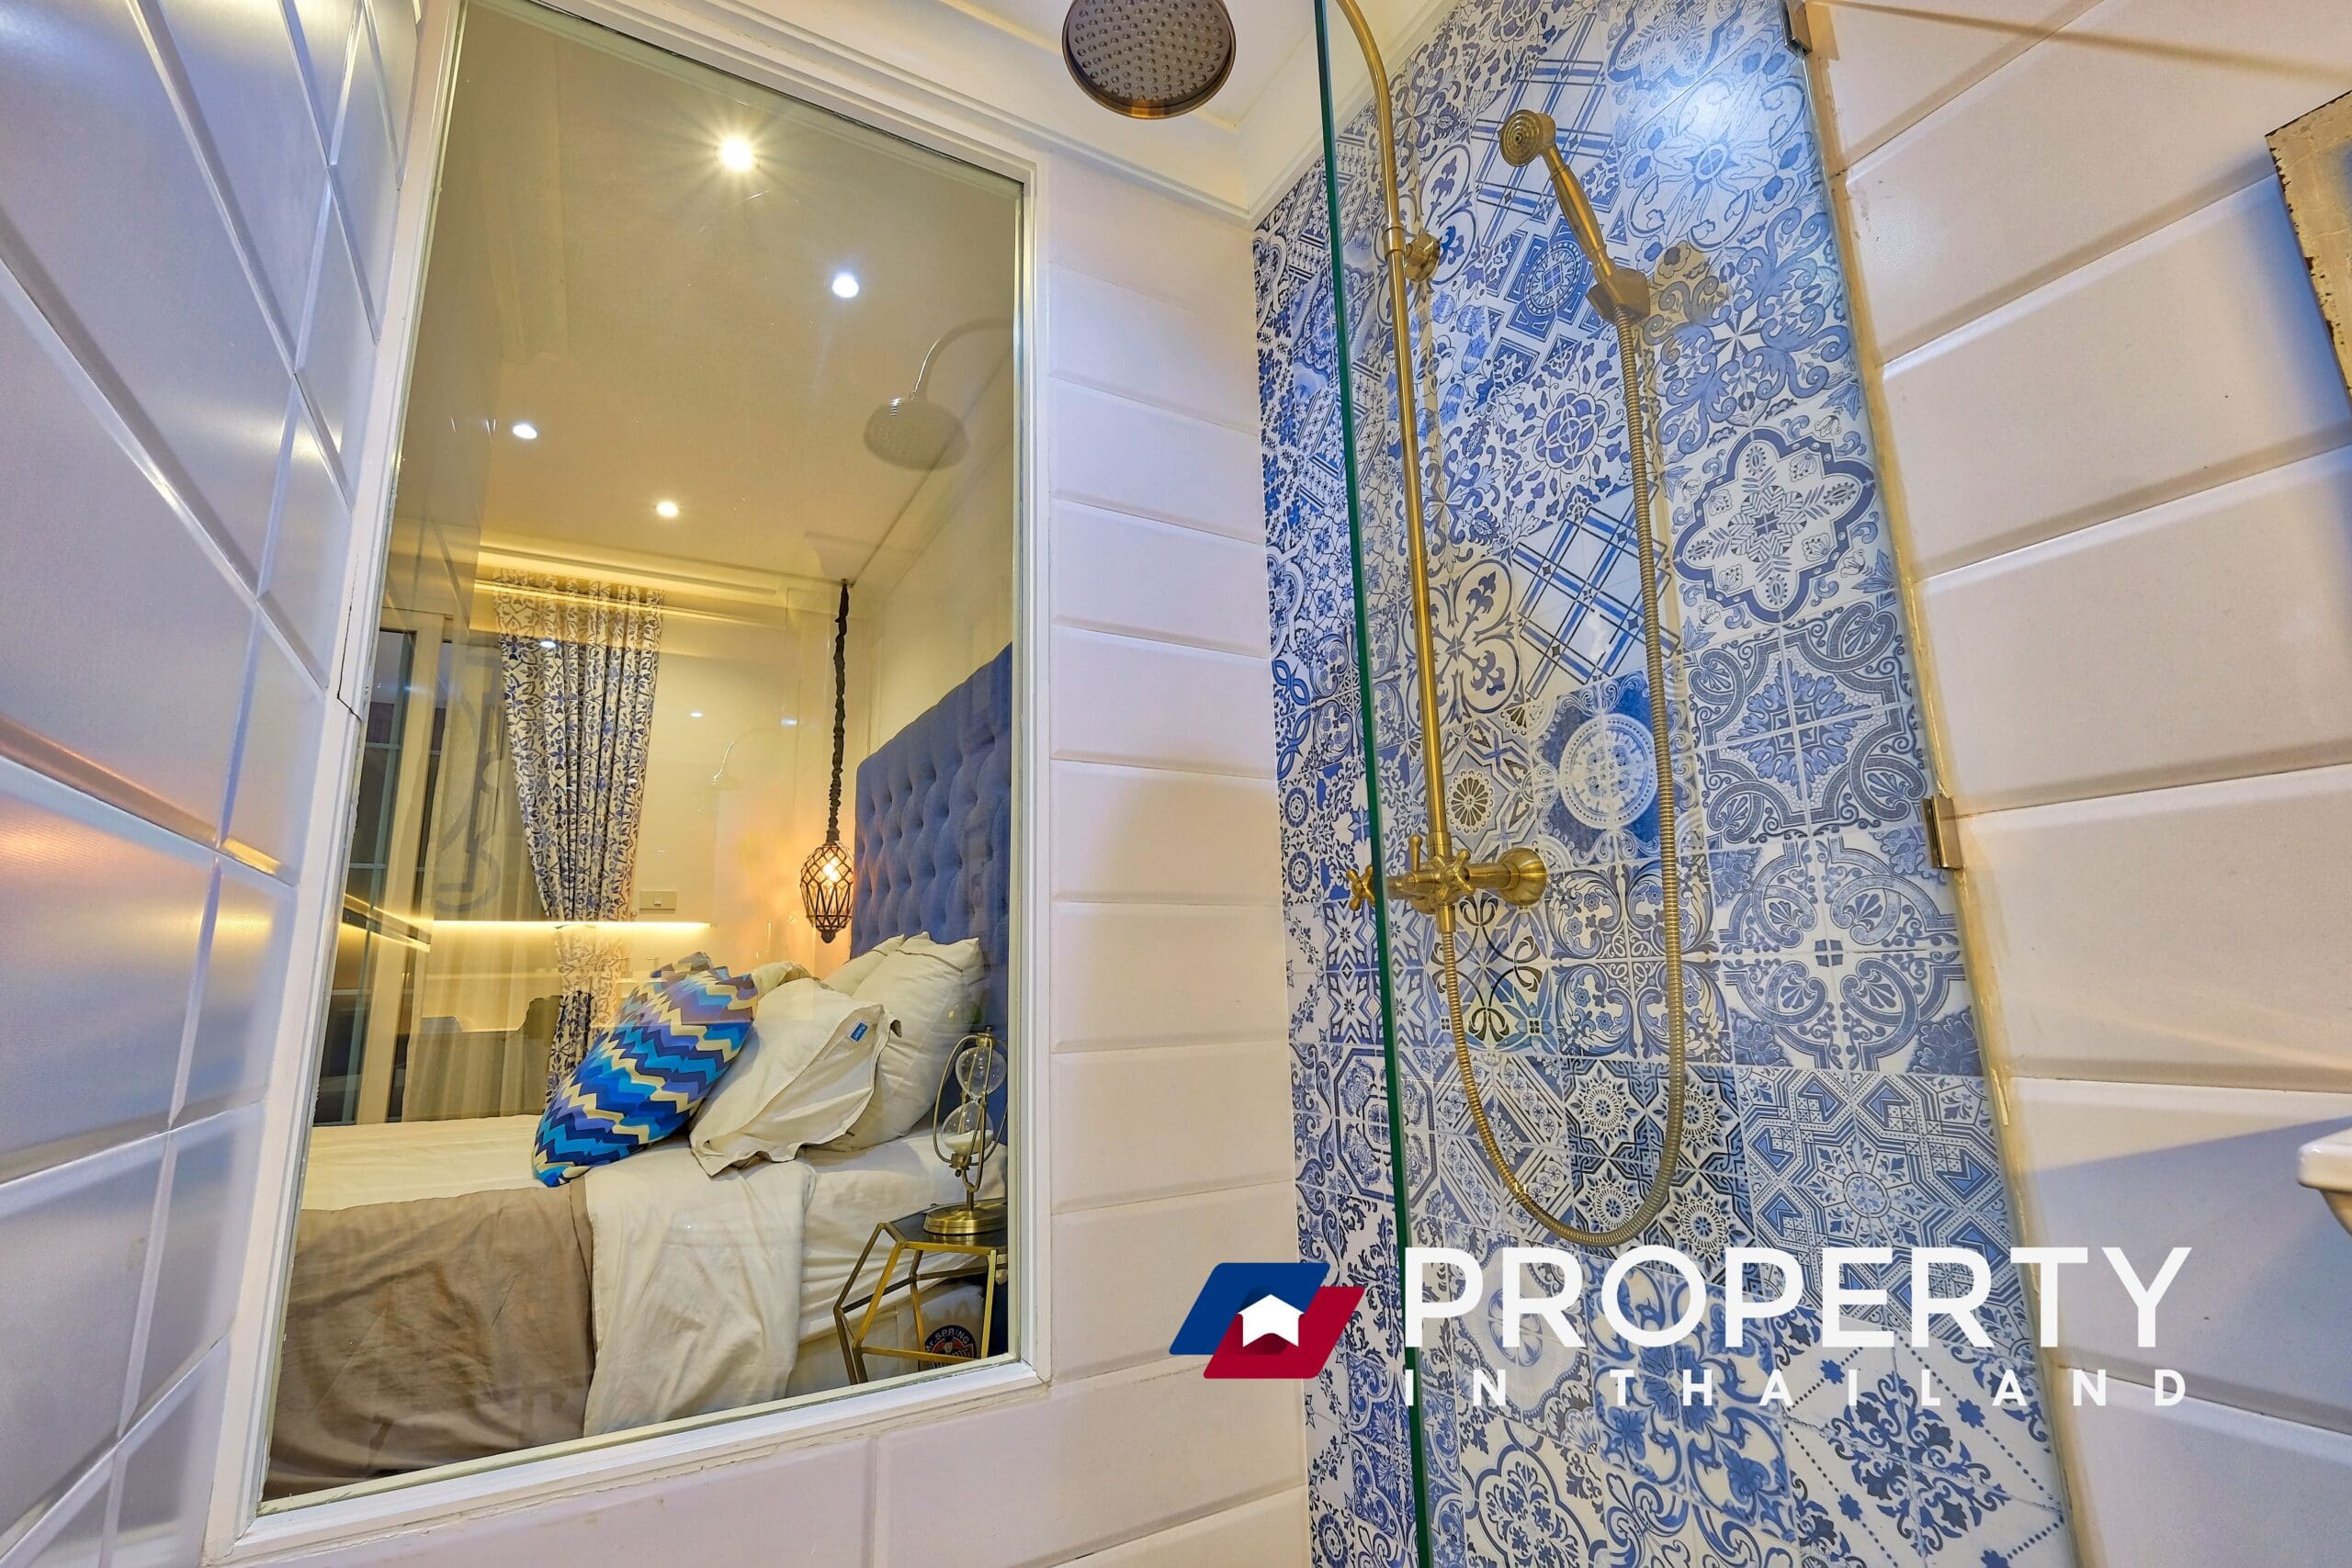 Property in thailand real estate (shower) Studio_258 sqft-min